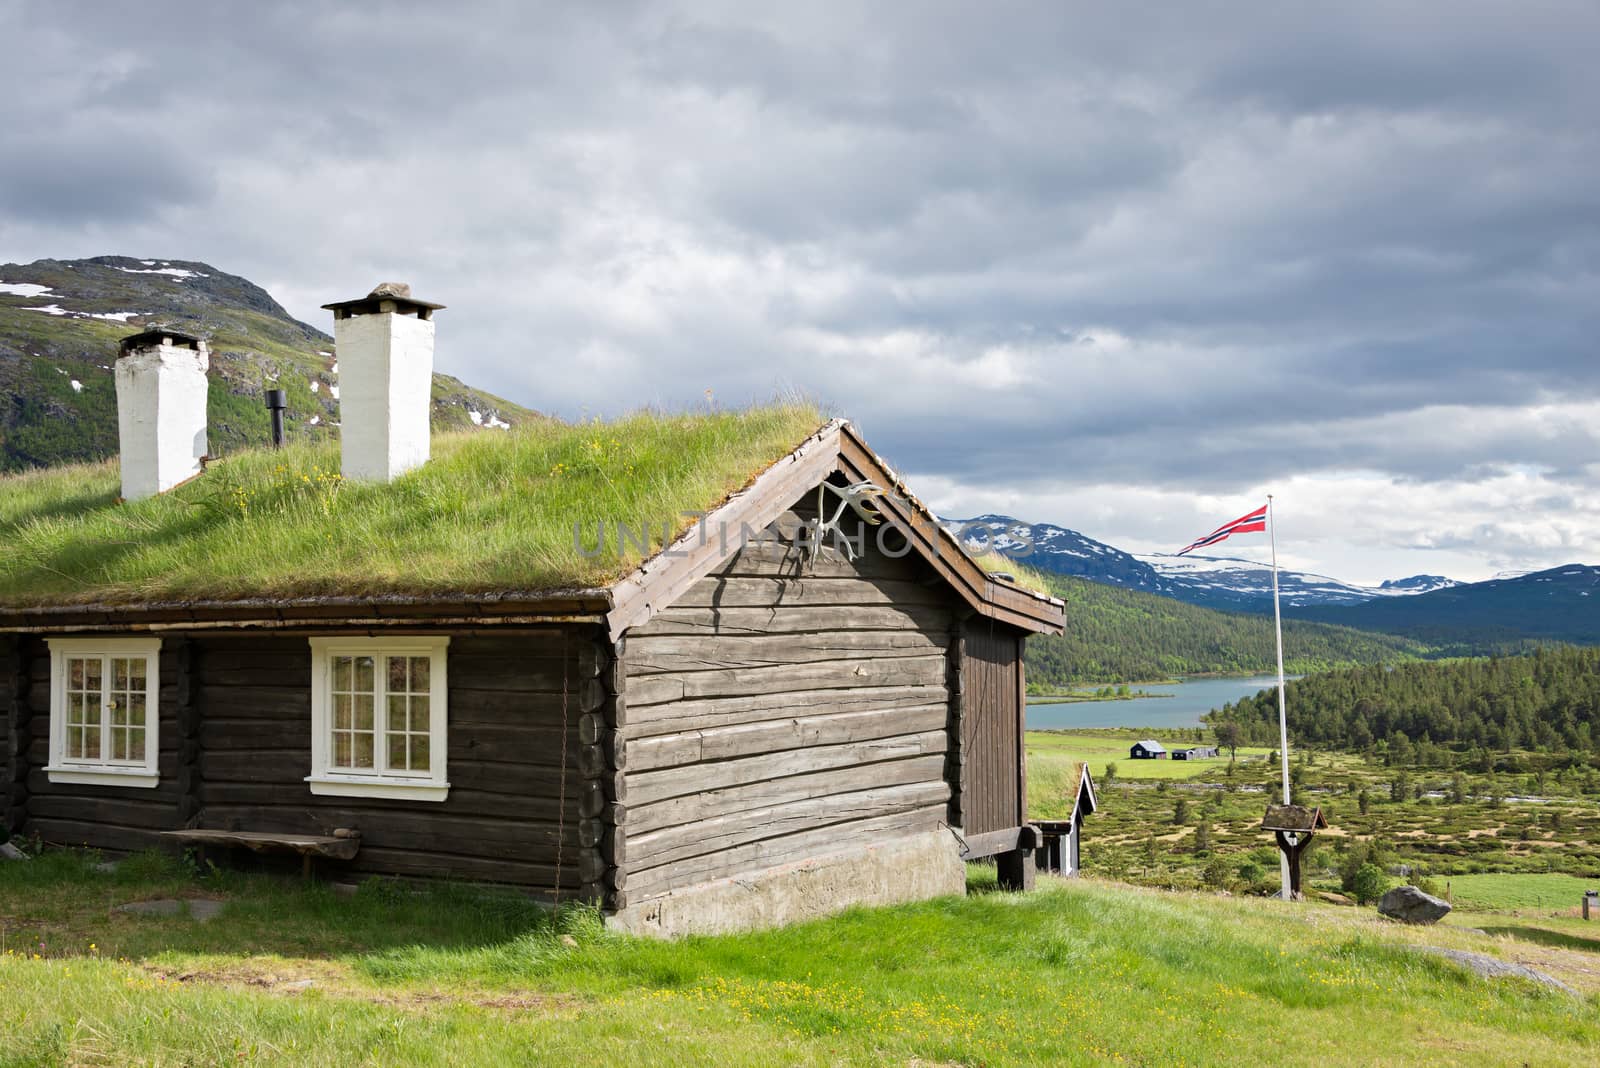 Sod roof log cabin by pljvv